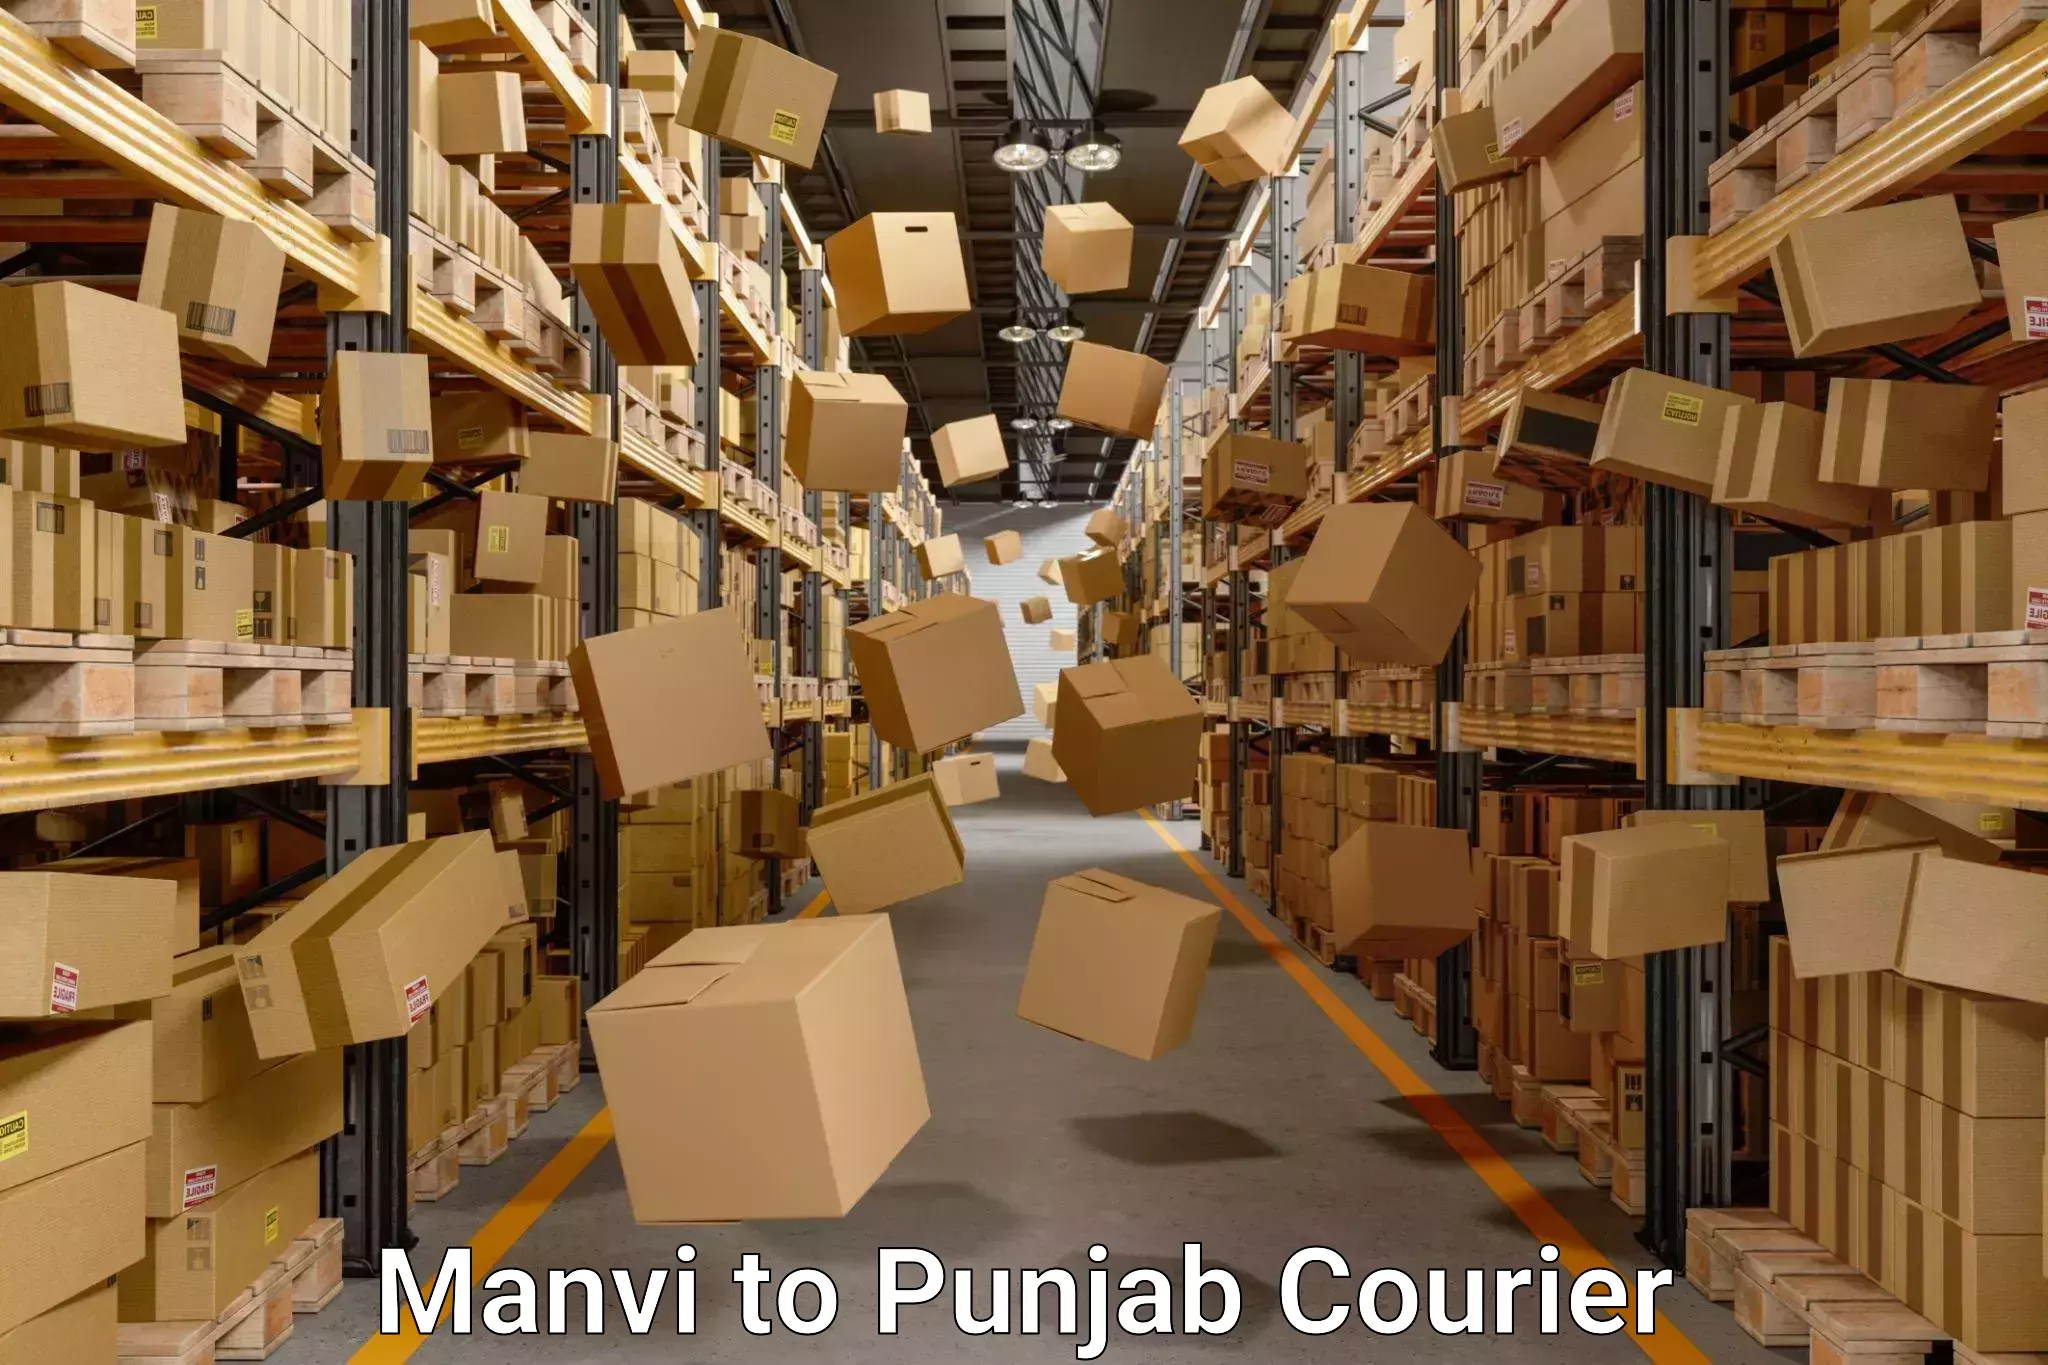 Home moving experts Manvi to Punjab